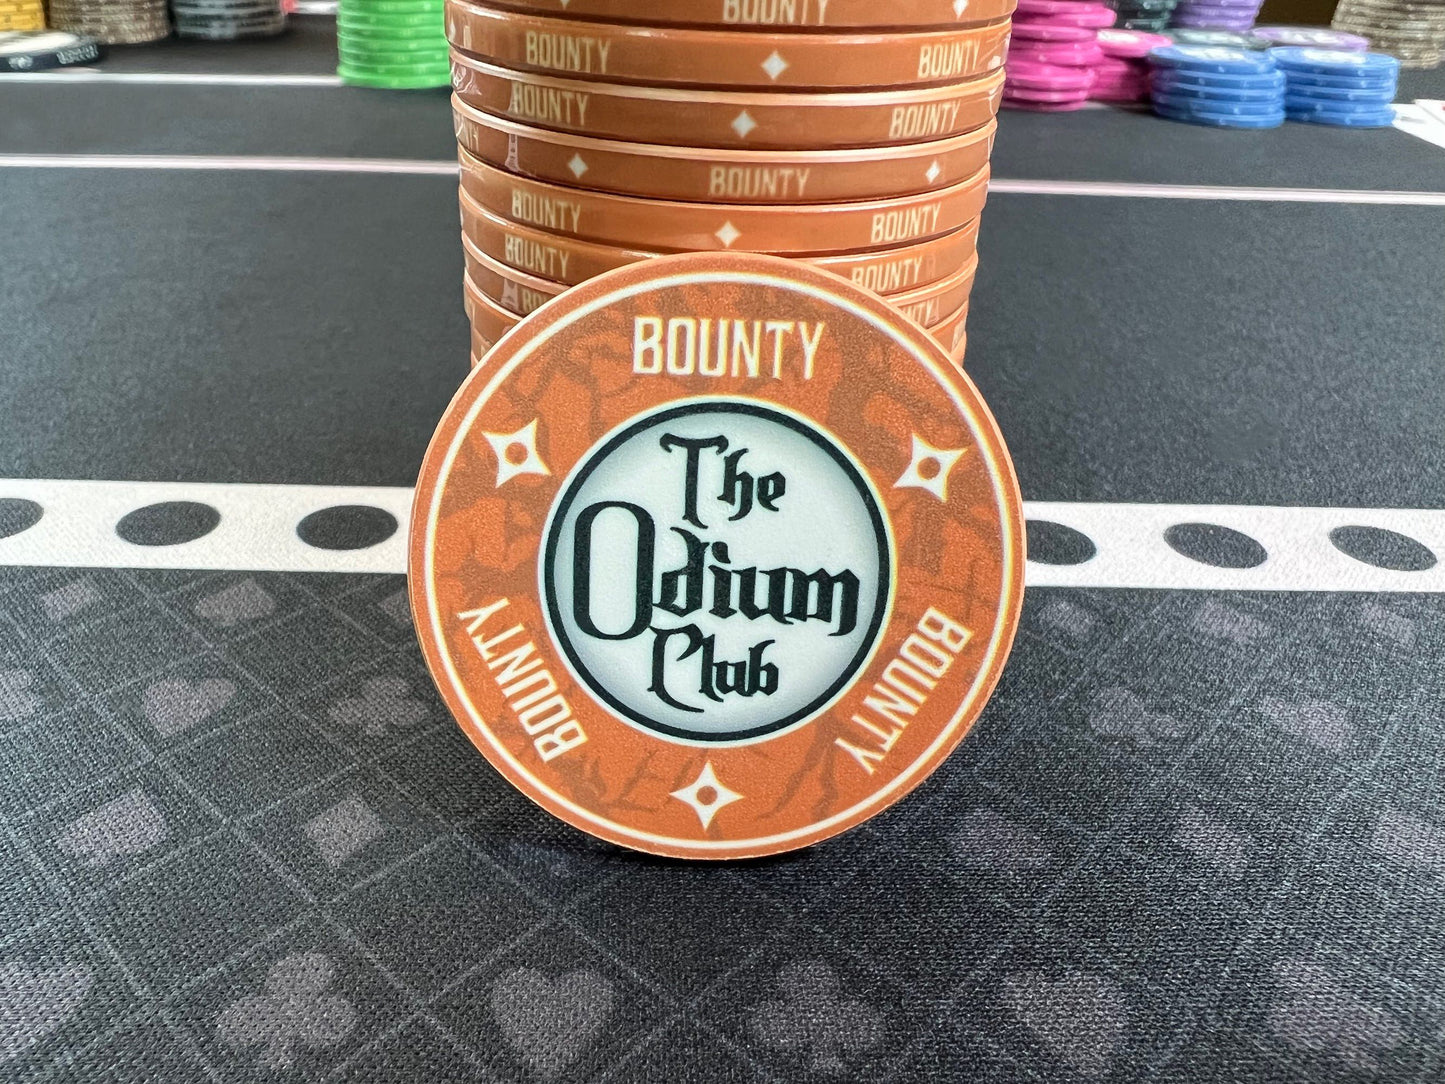 Odium Club Bounty Chips [43mm]